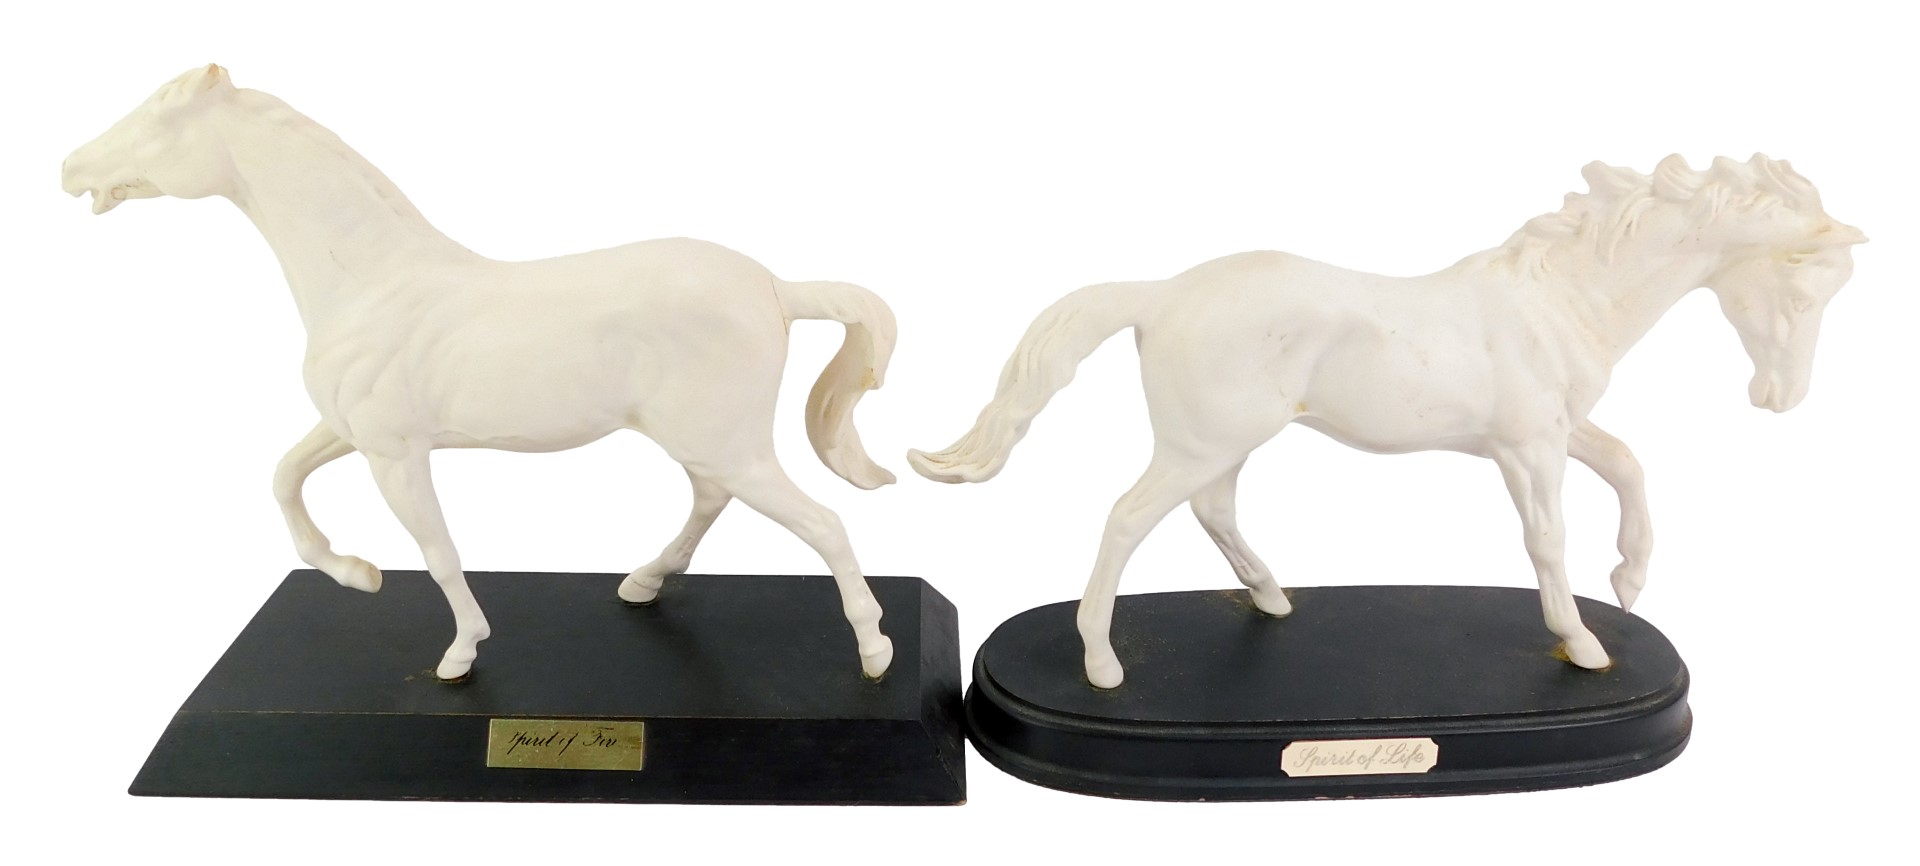 A Royal Doulton matt porcelain equine figure modelled as Spirit of Life, on oval ebonised base